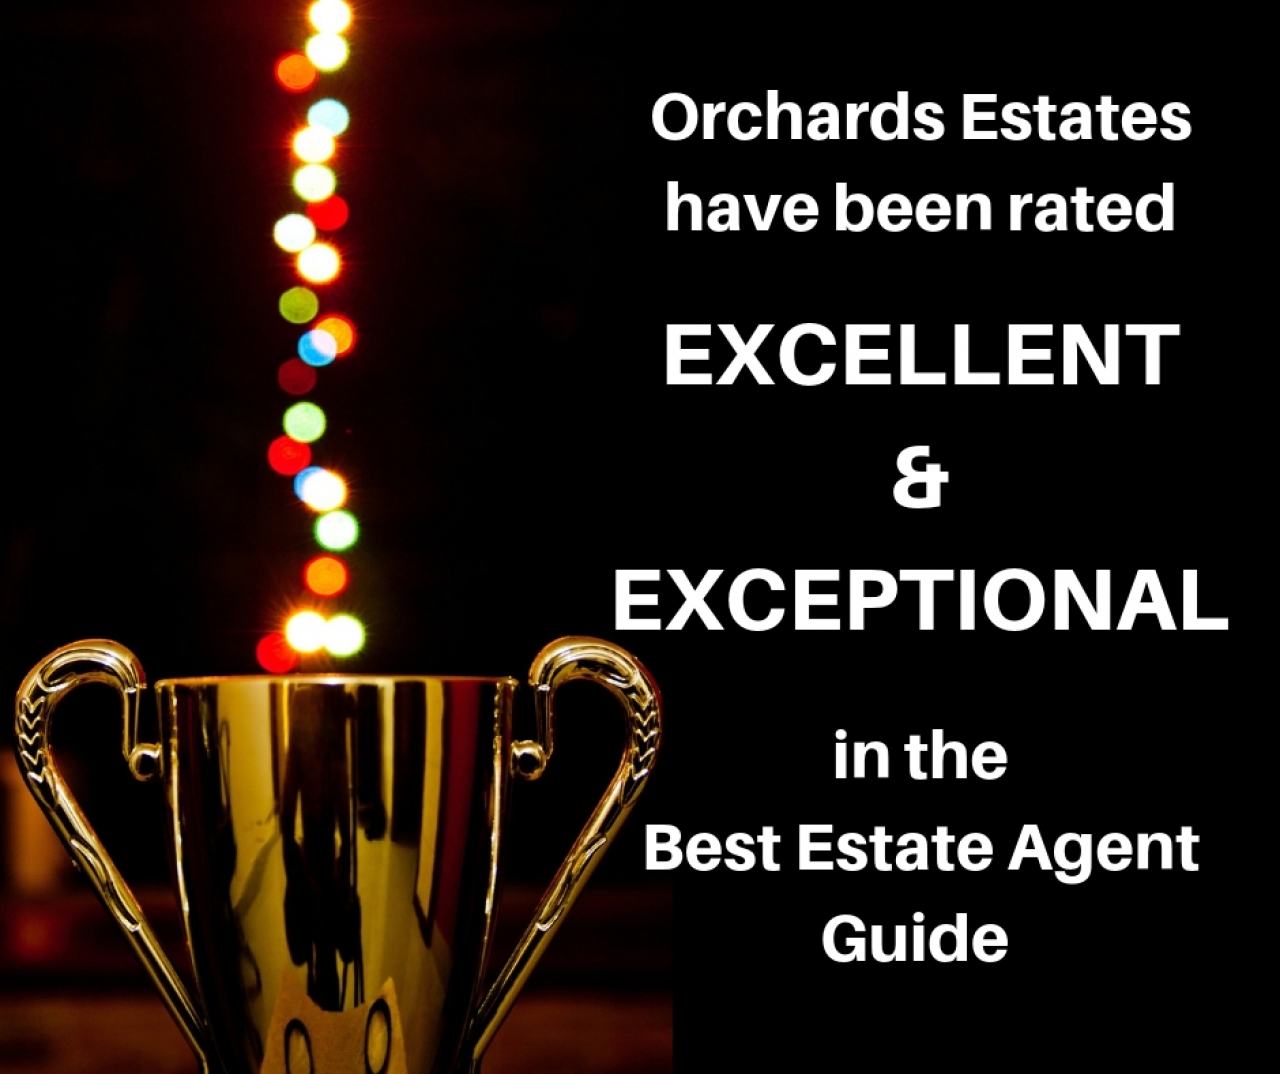 >Best Estate Agent Guide winners